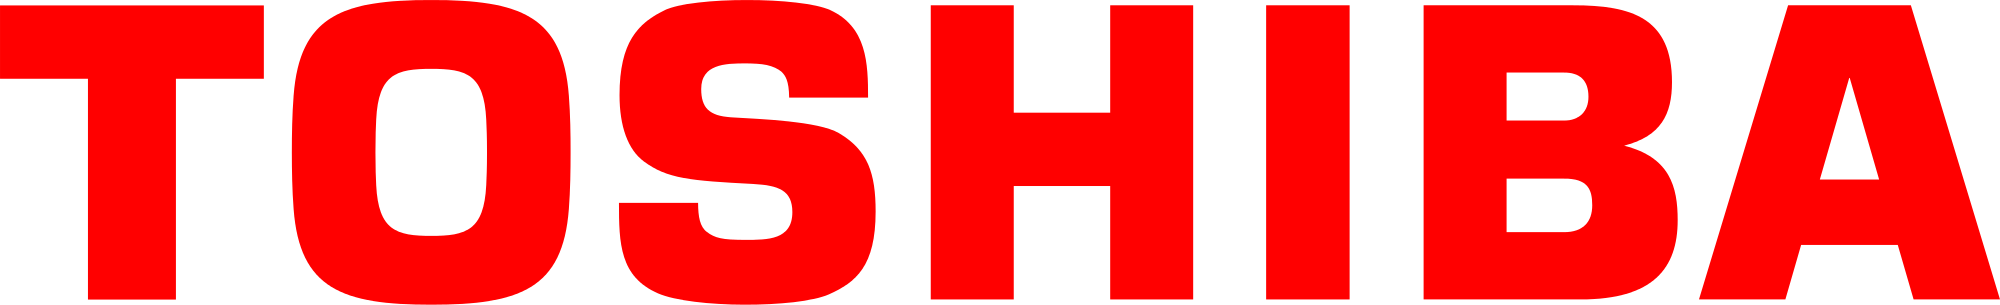 Toshiba_logo